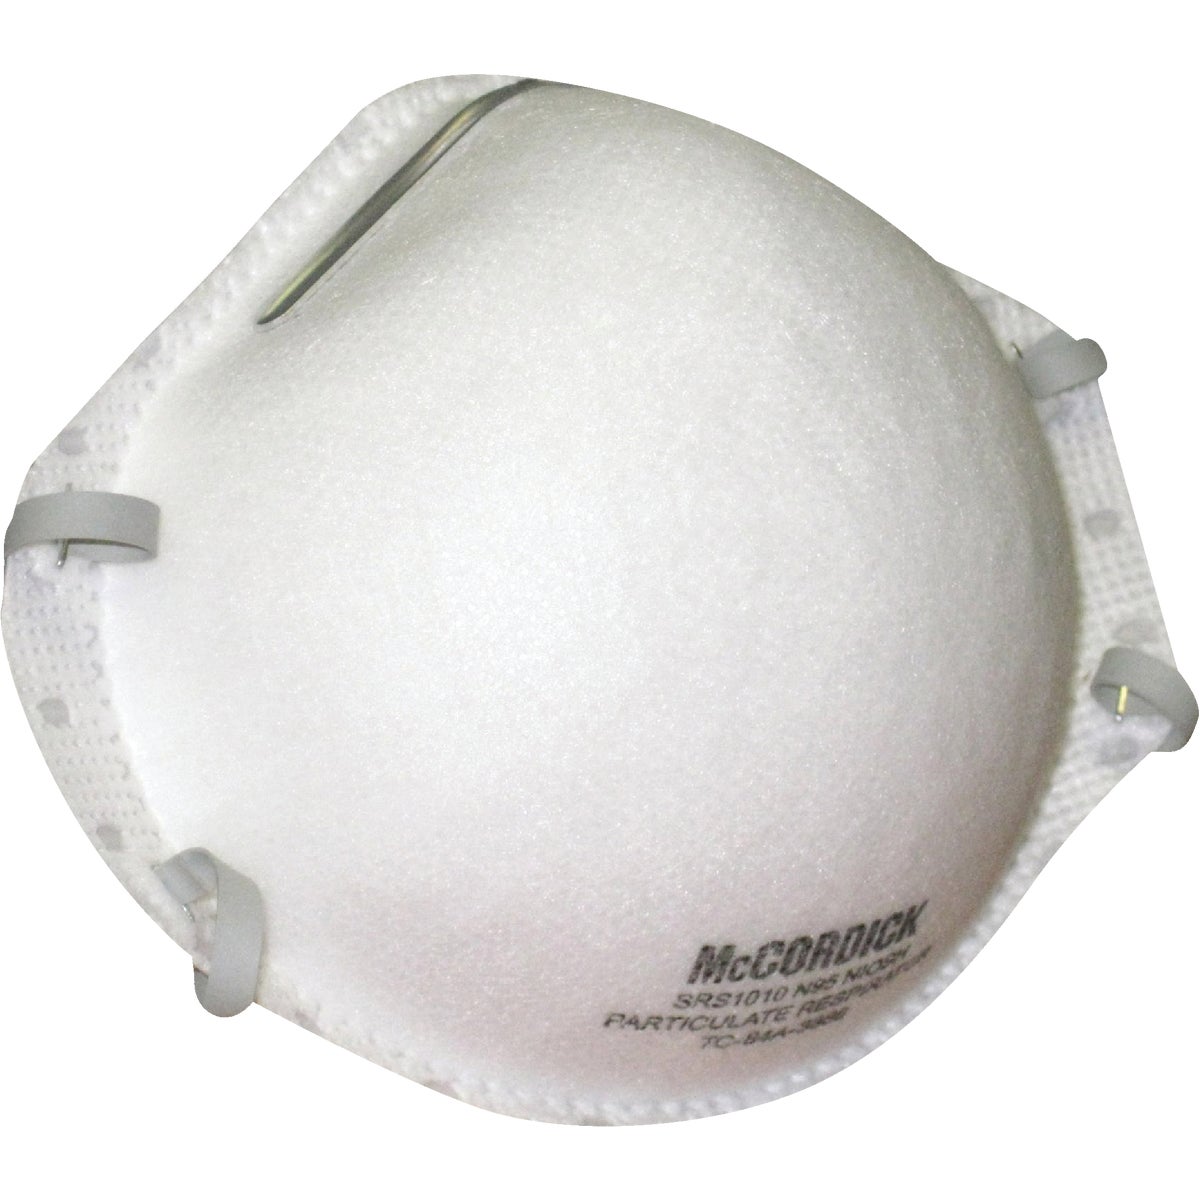 McCordick Glove N95 Dust & Mist Mask (20-Pack)